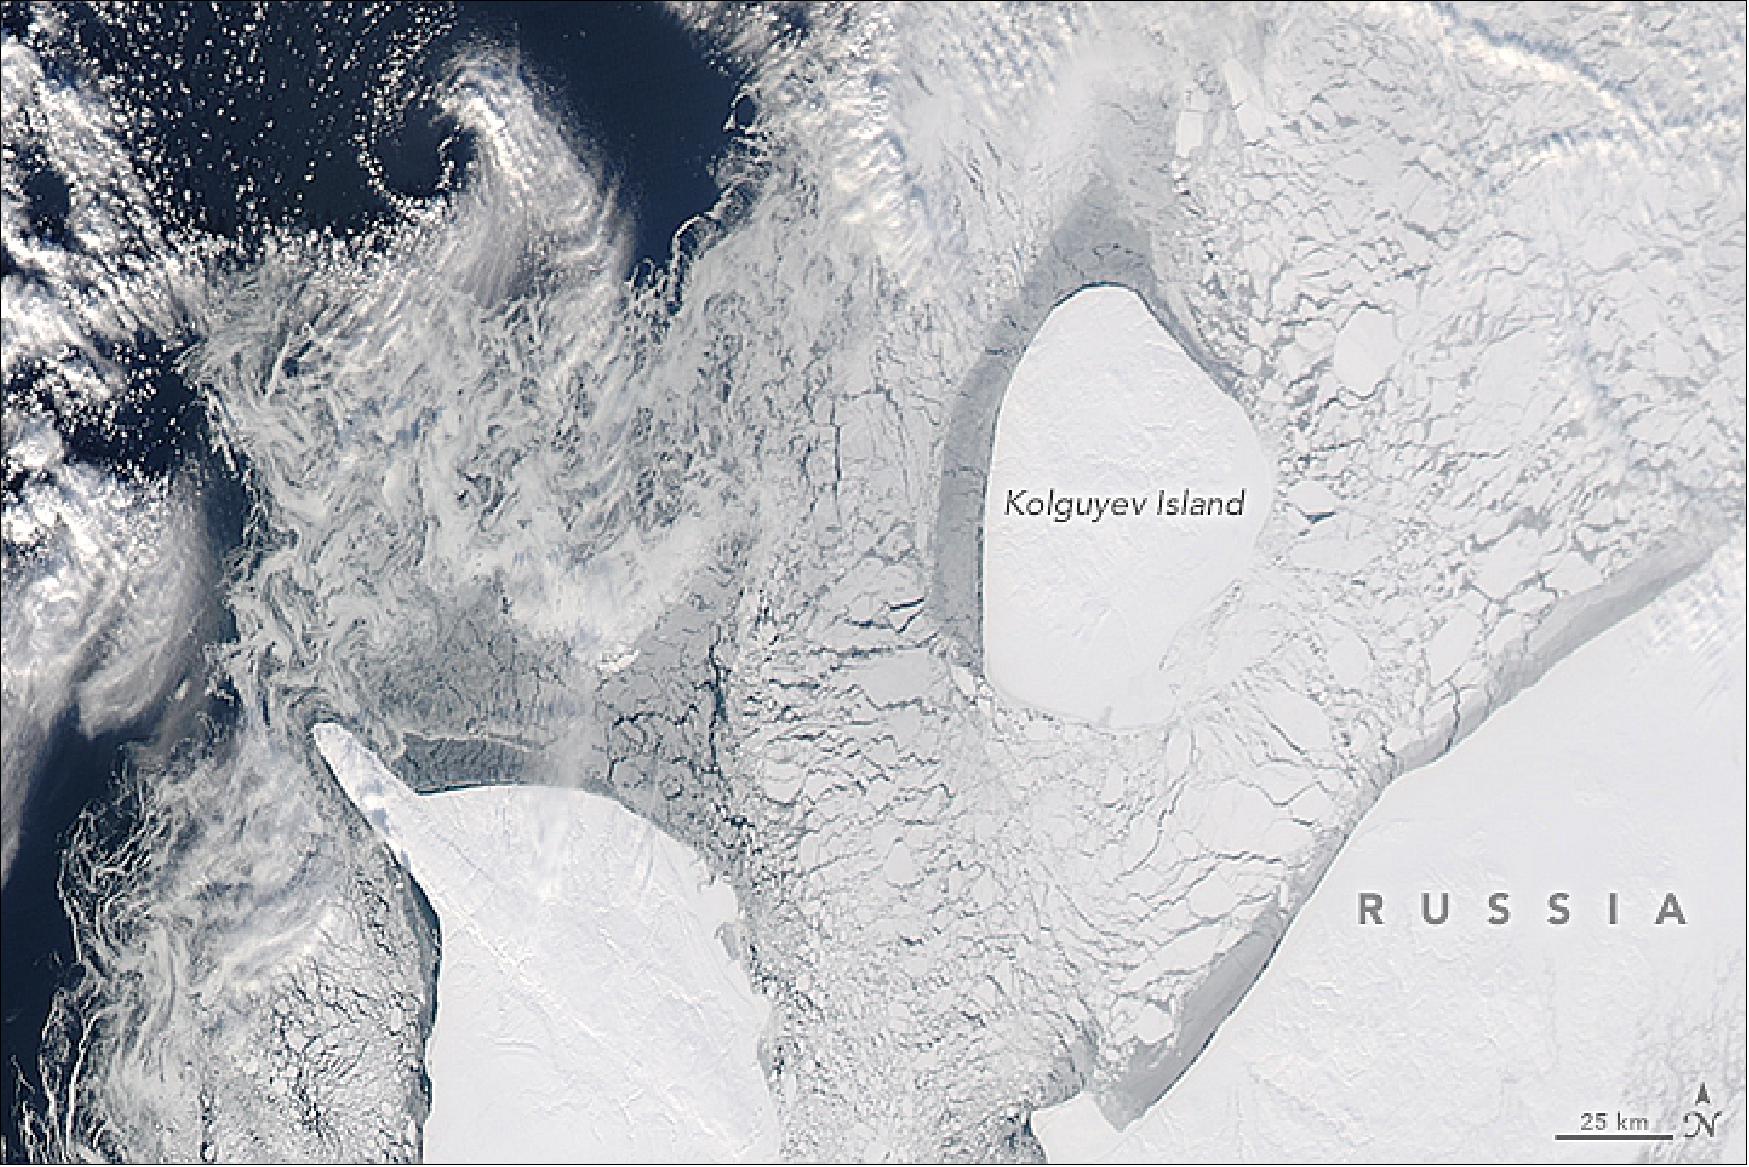 Figure 76: Detail image of sea ice near Russia (image credit: NASA Earth Observatory)